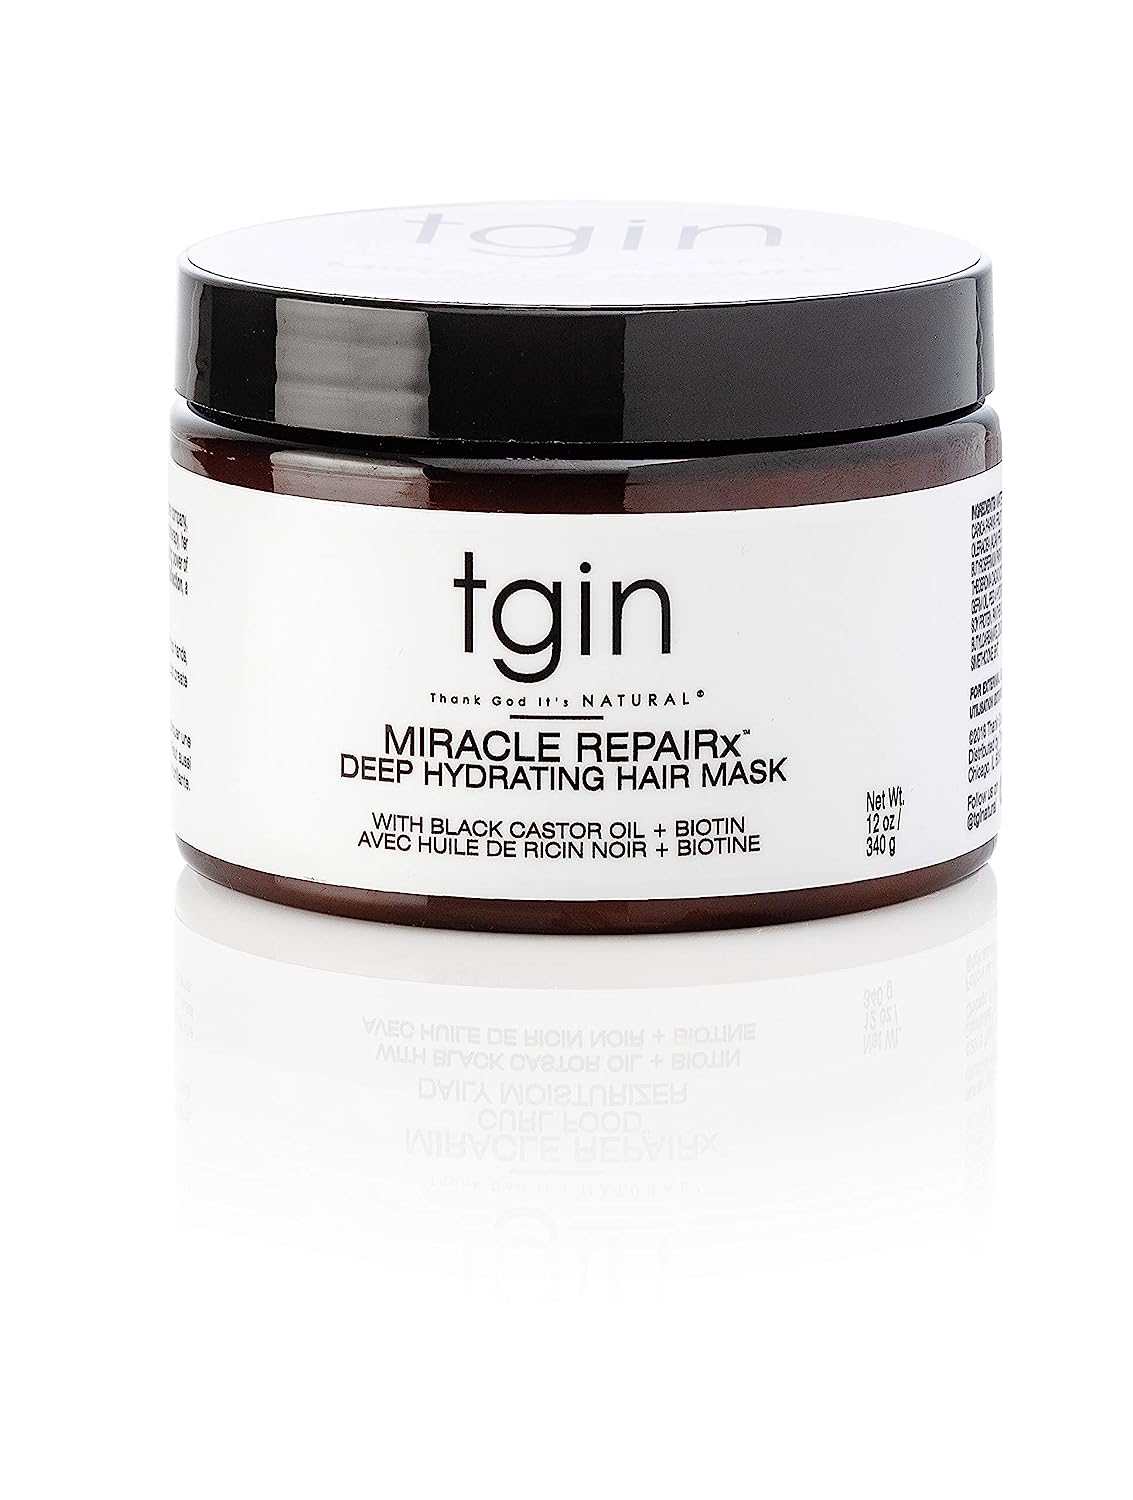 tgin Miracle Repairx Deep Hydrating Hair Mask For [...]